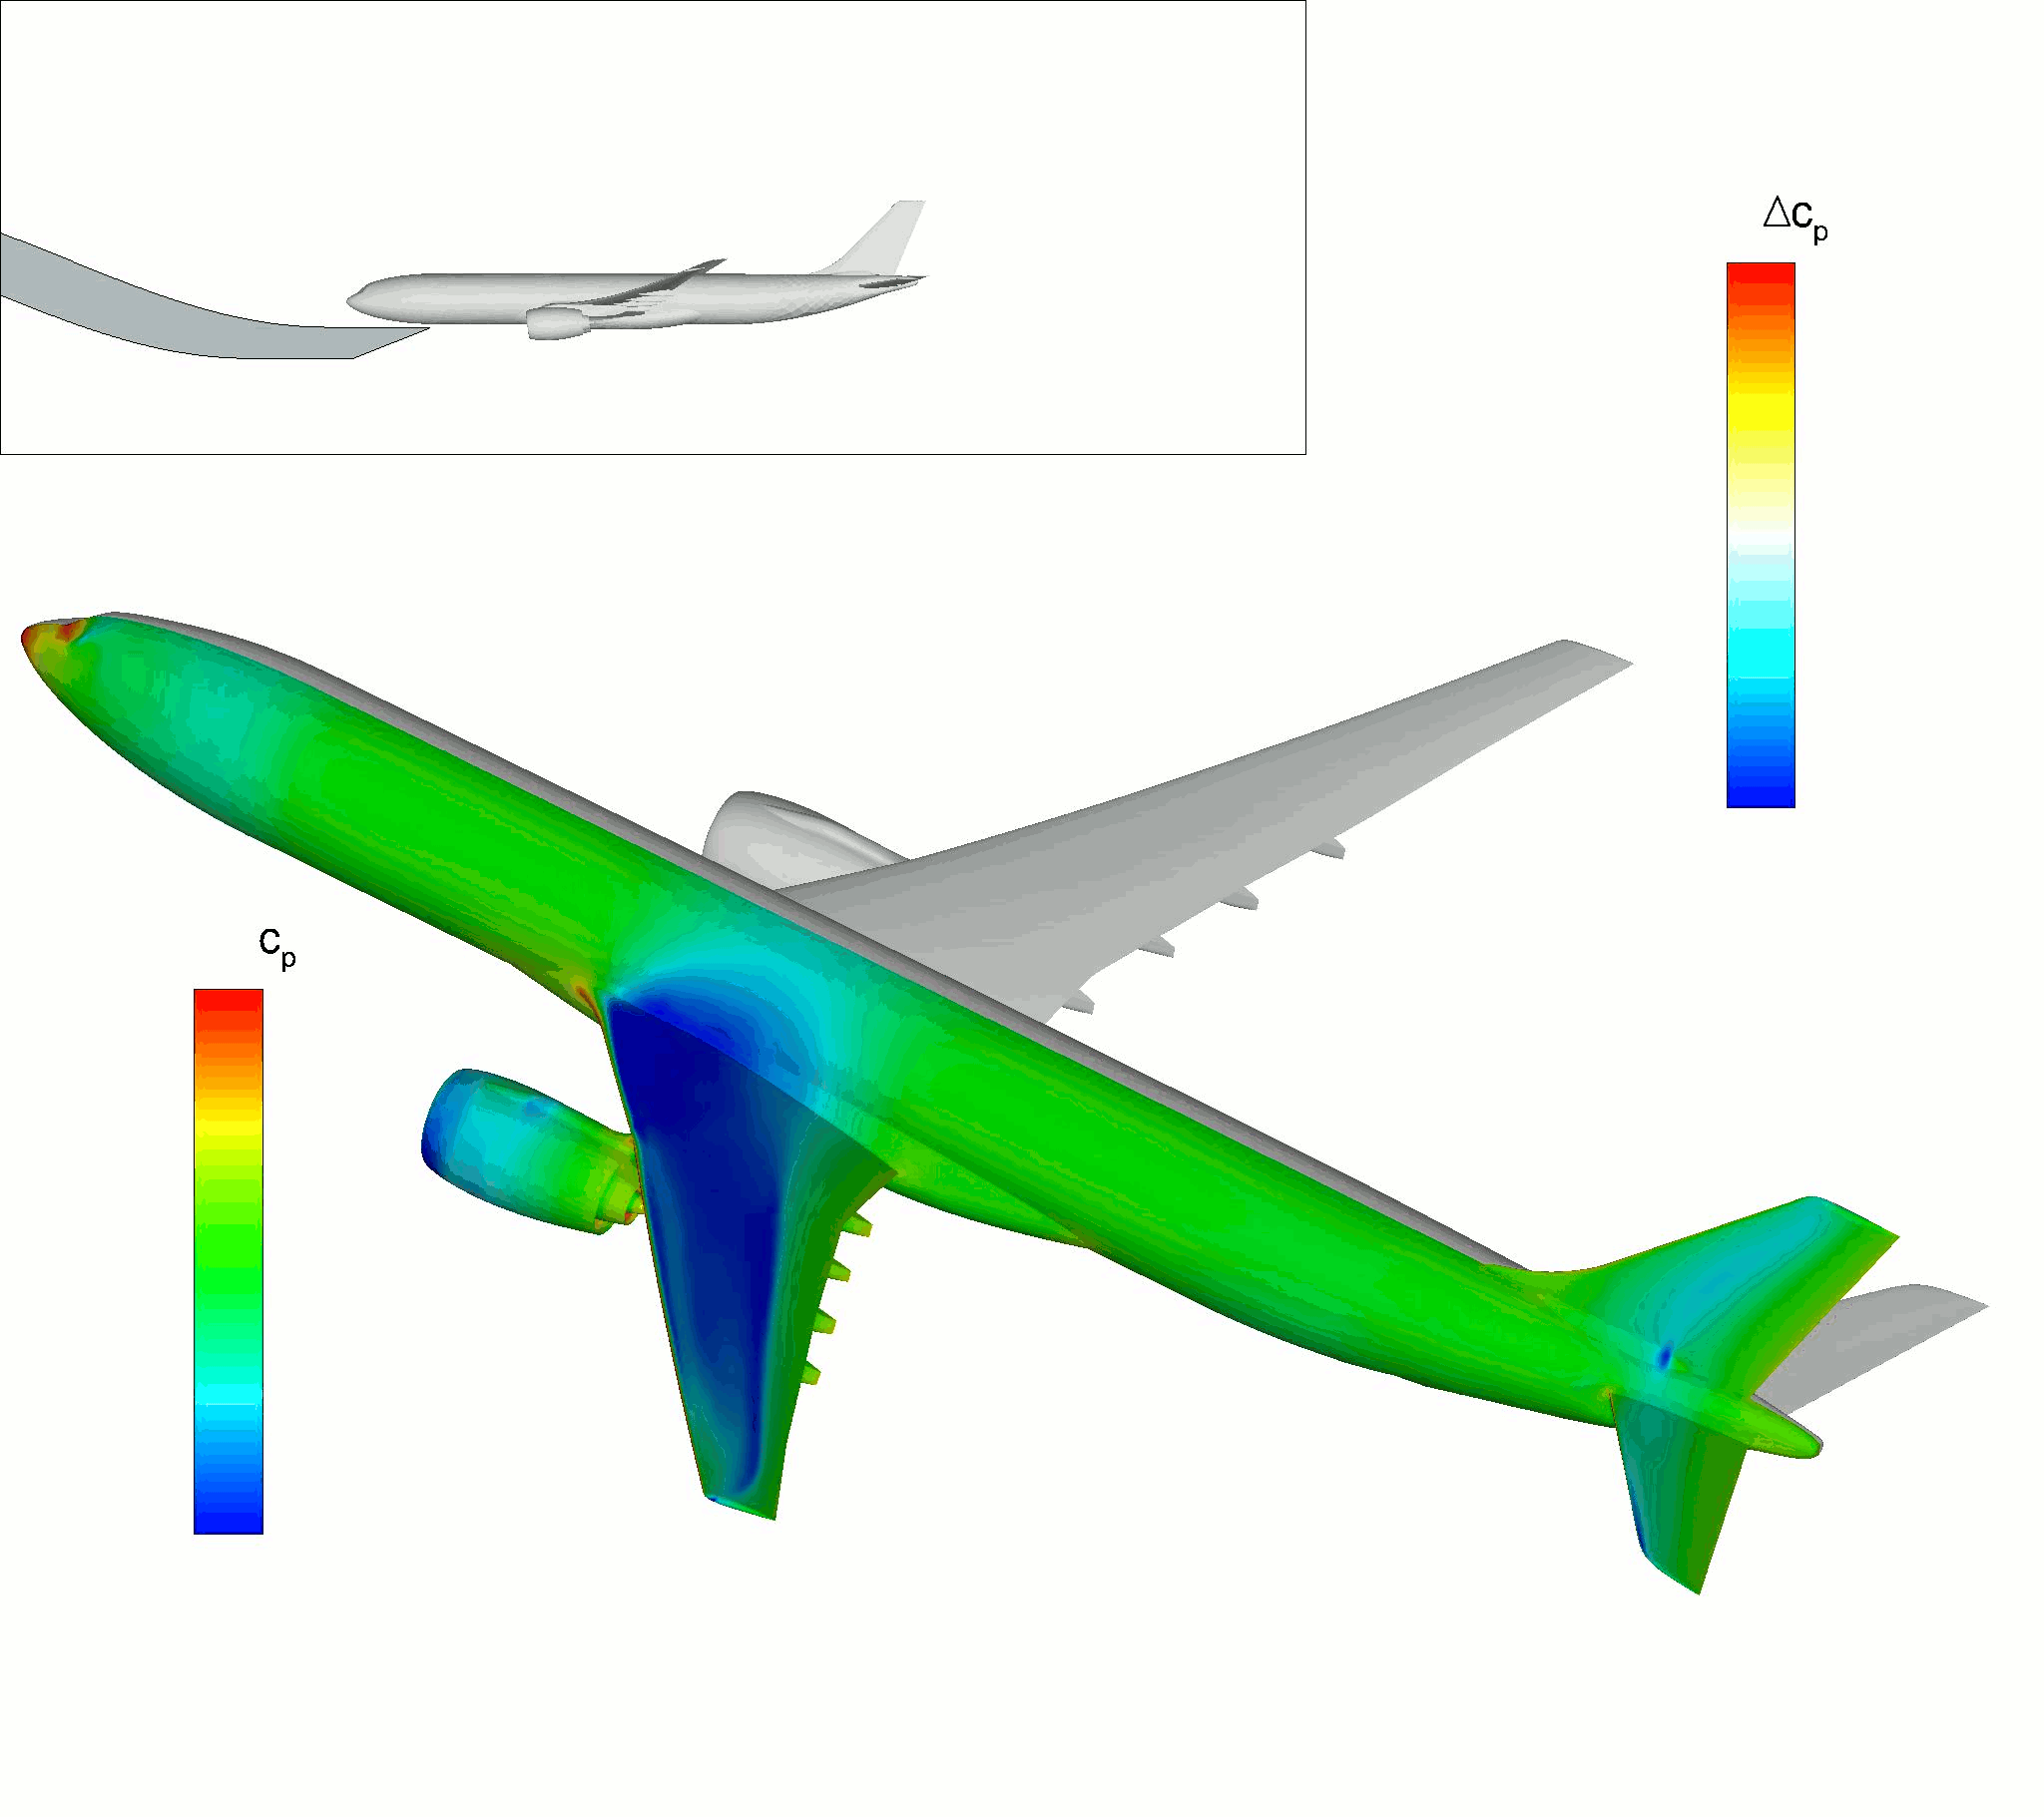 Aeroelastic simulation of aircraft gust encounter